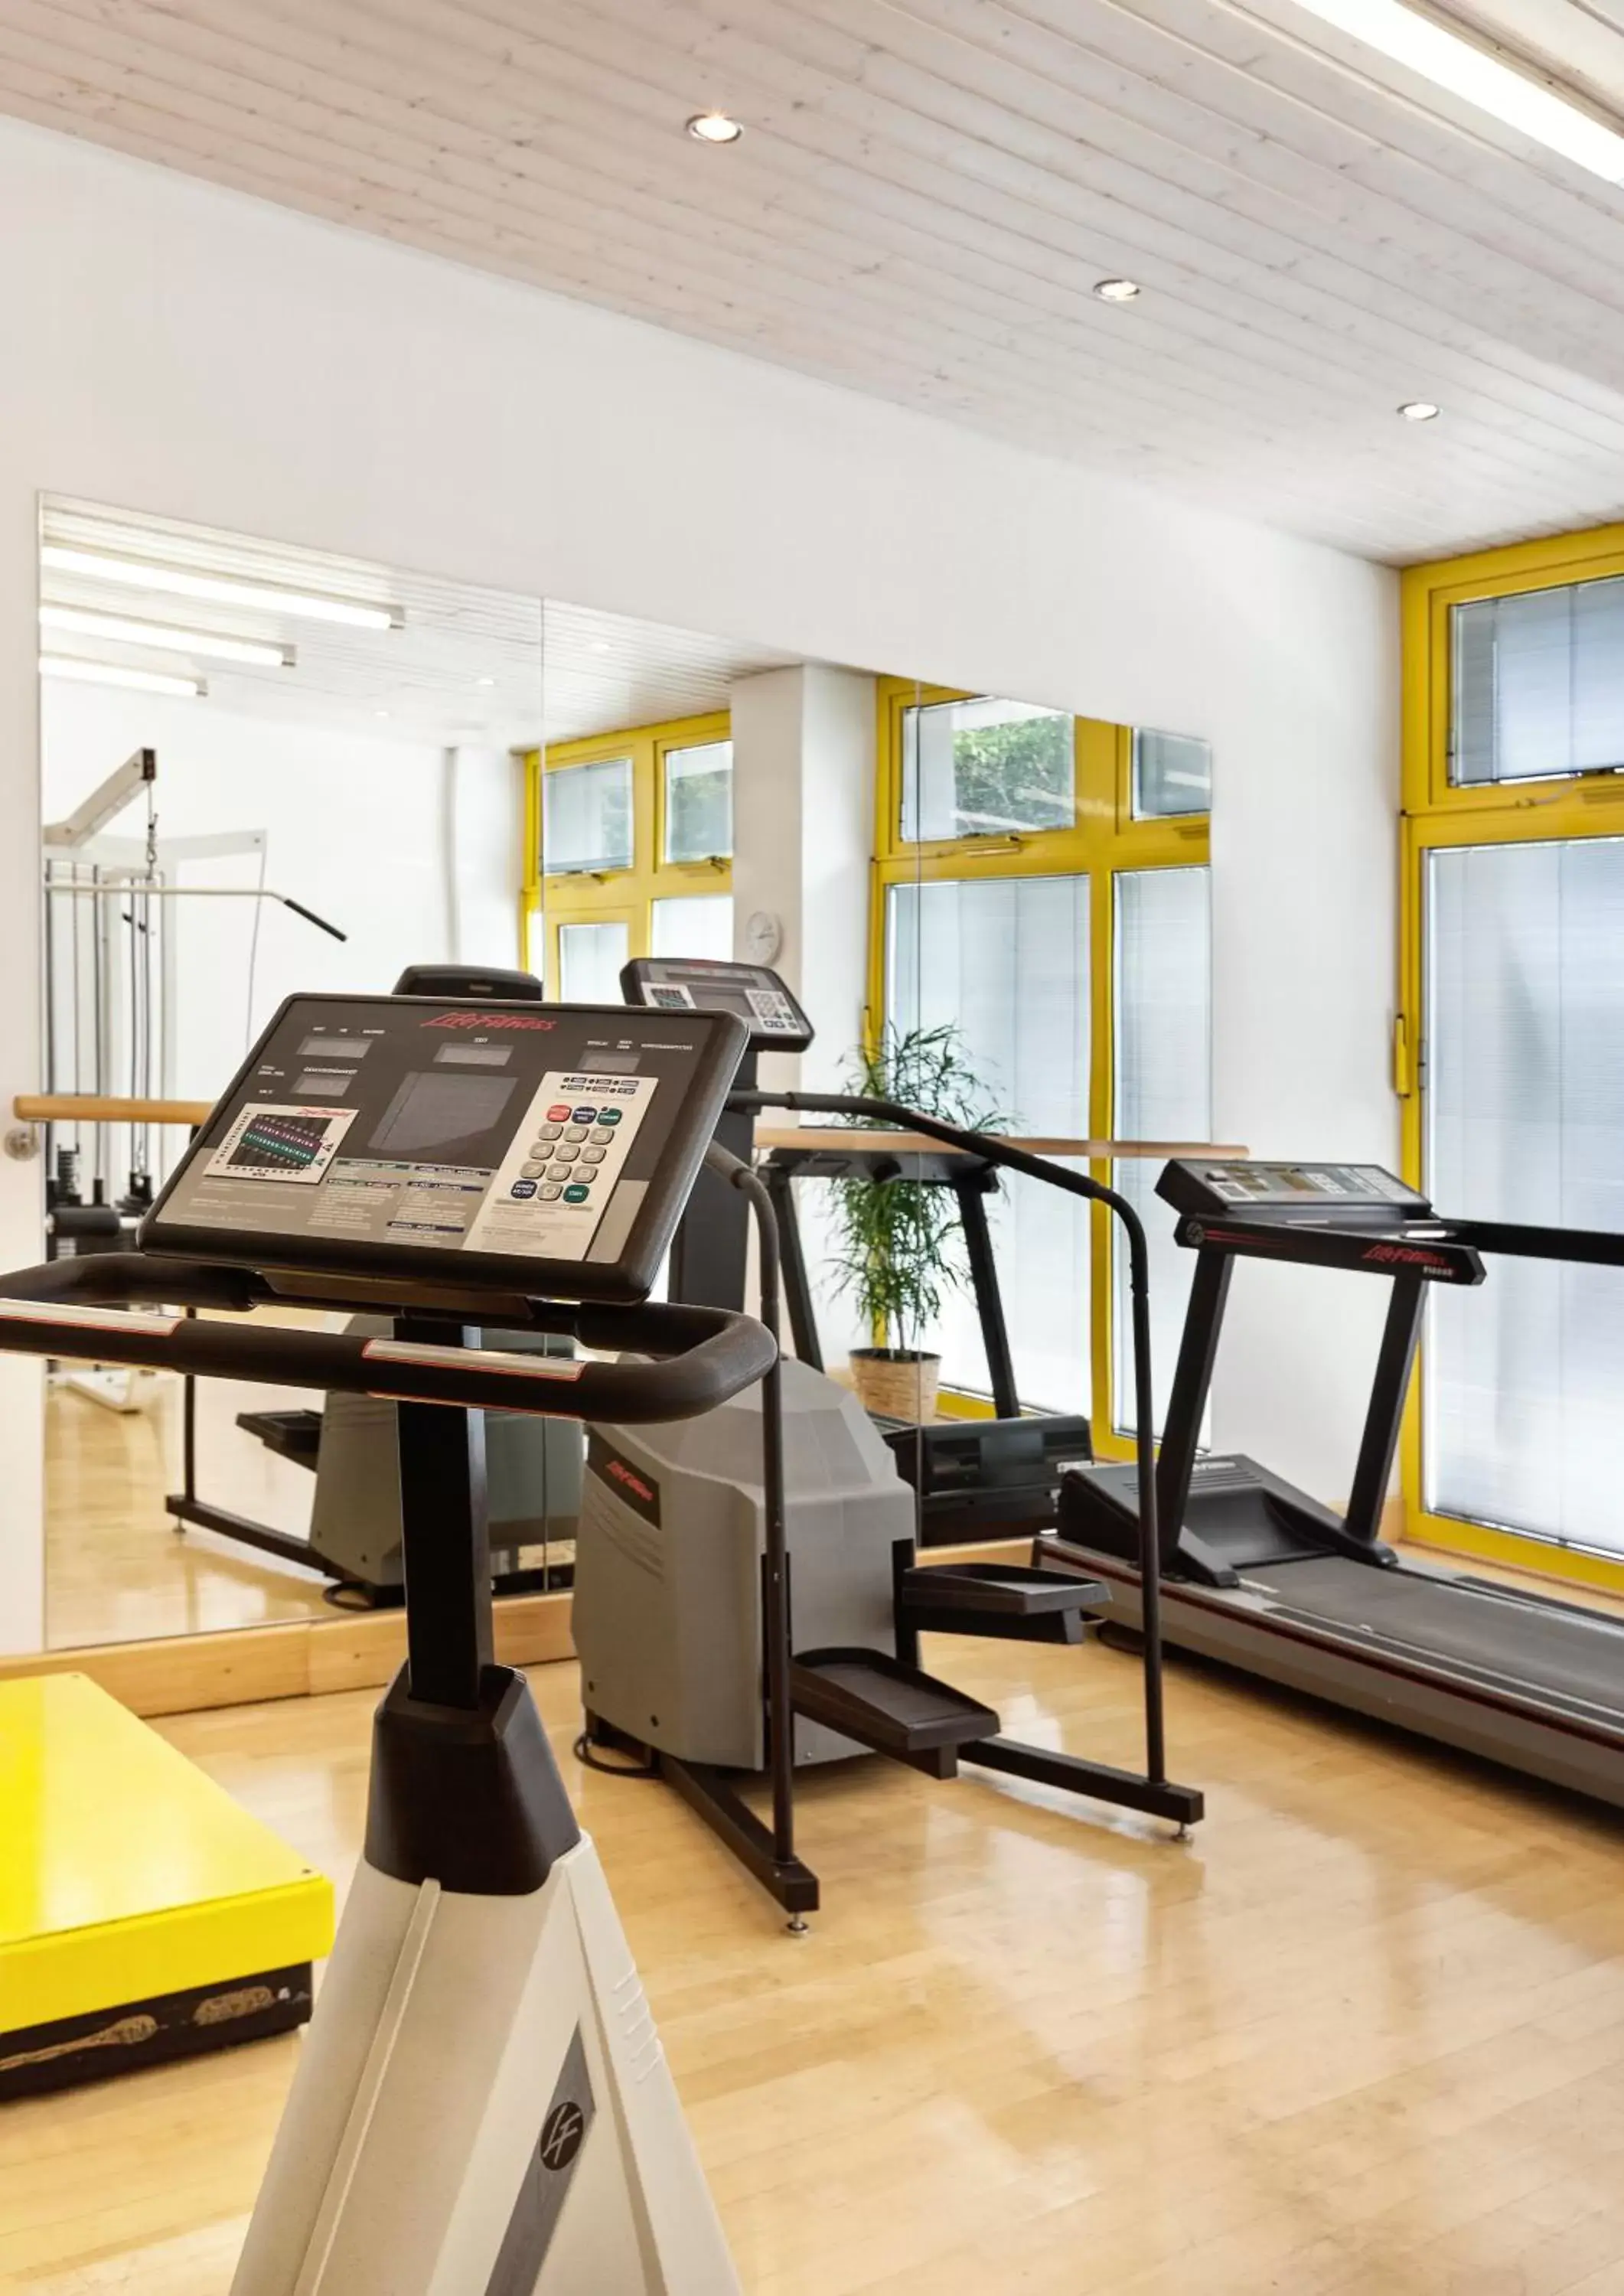 Fitness centre/facilities, Fitness Center/Facilities in Best Western Premier Grand Hotel Russischer Hof